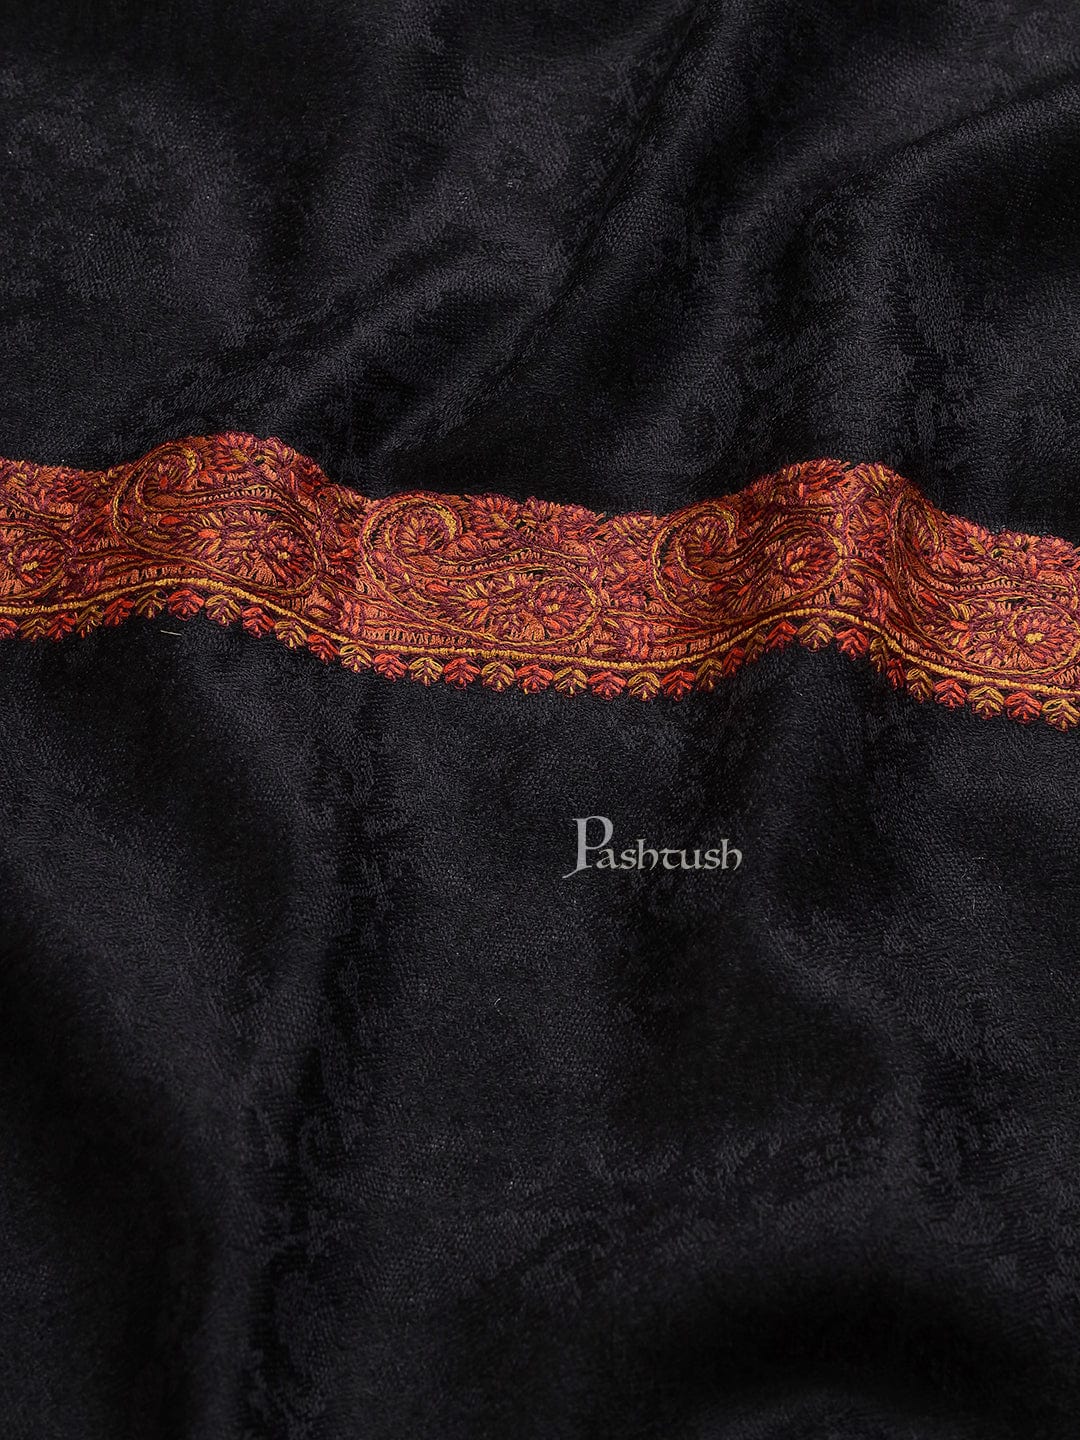 Pashtush India Womens Shawls Pashtush Womens Embroidered Shawl, Neem Daur with Paisley Border Shawl, Black